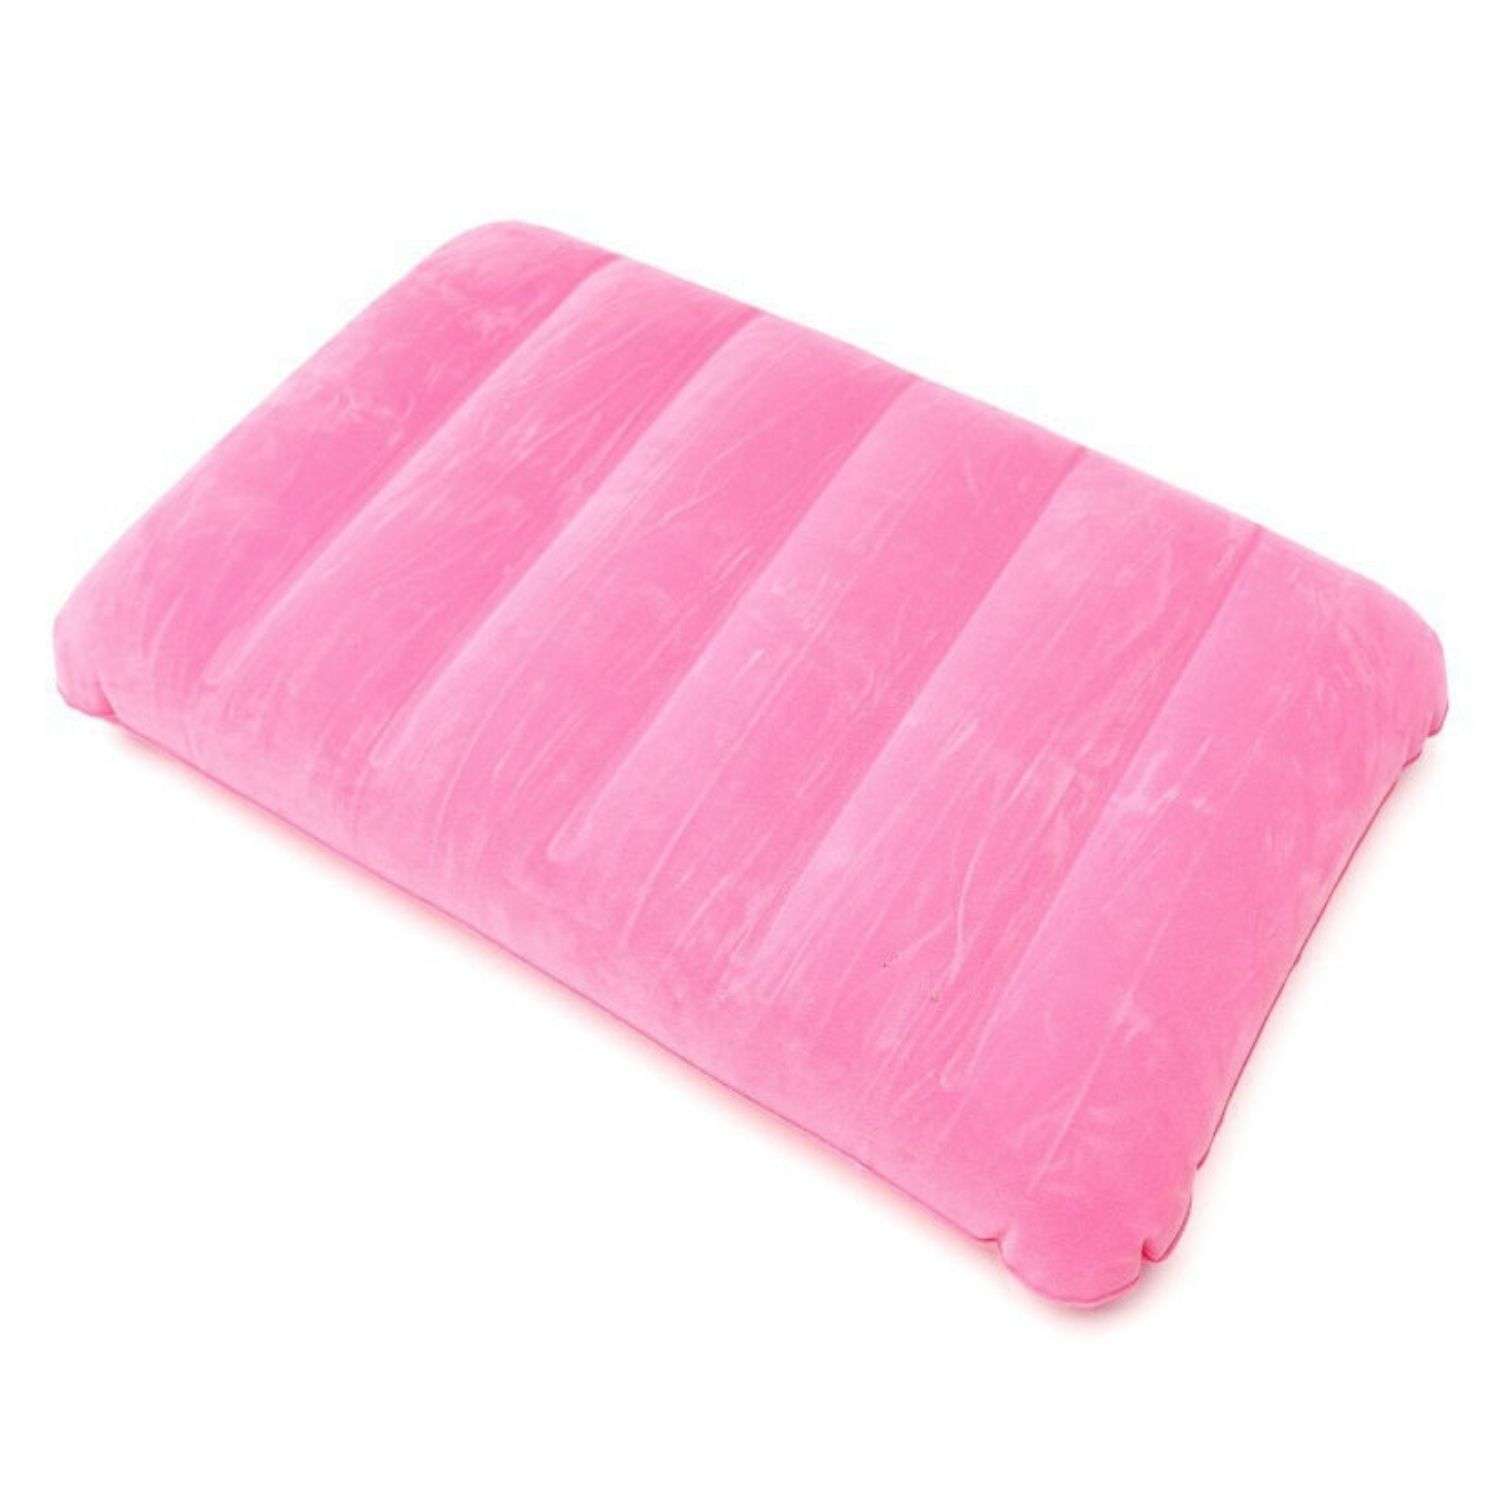 Подушка для путешествий China Dans надувная 56х35 см розовая - фото 1